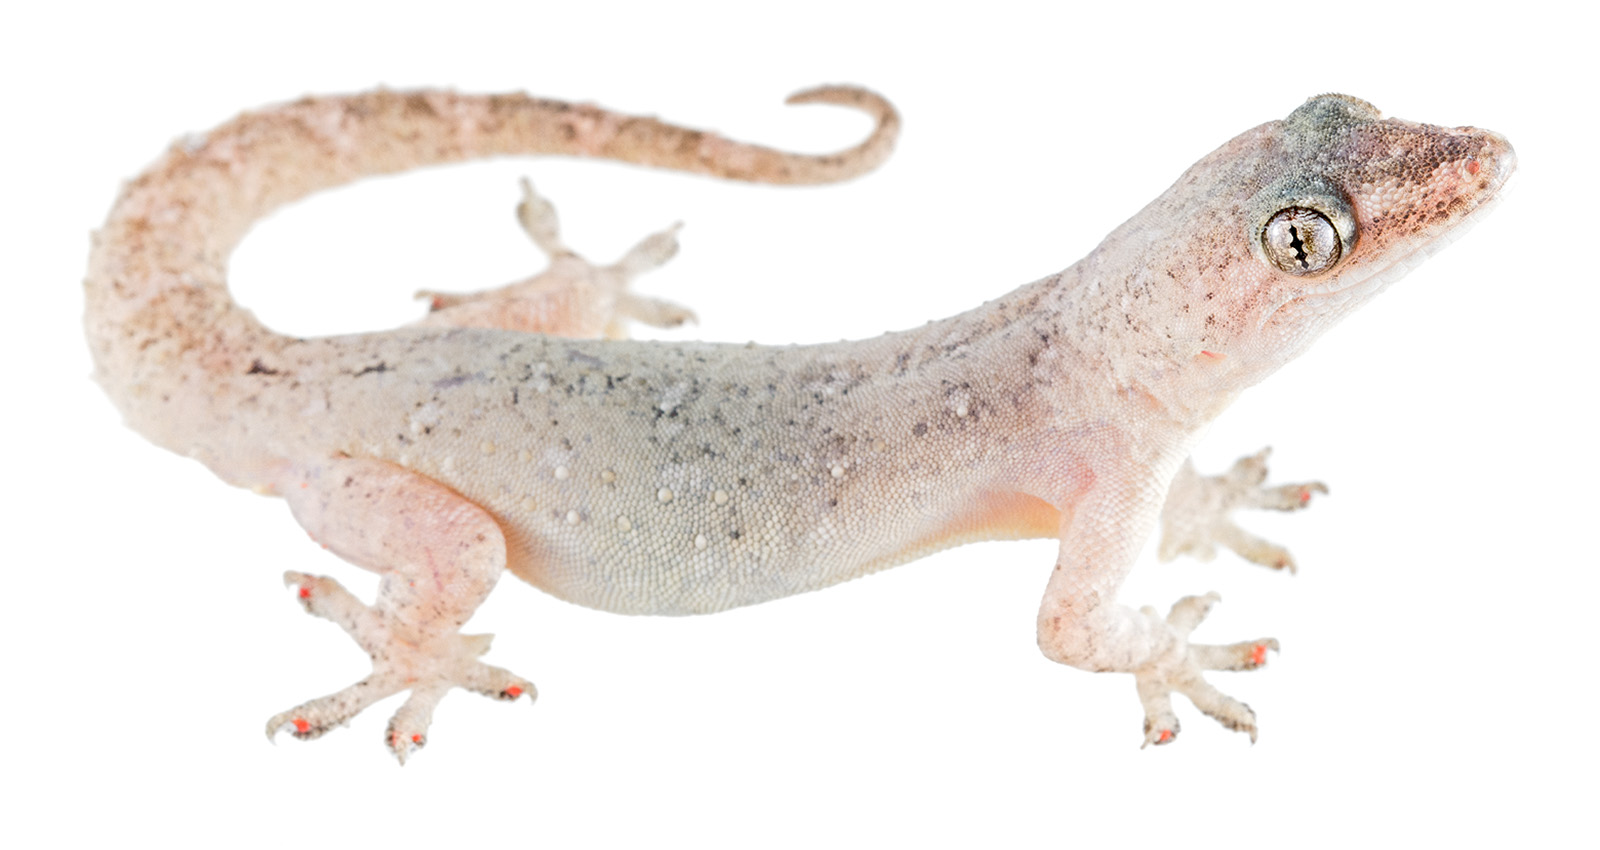 Common House-Gecko (Hemidactylus frenatus)